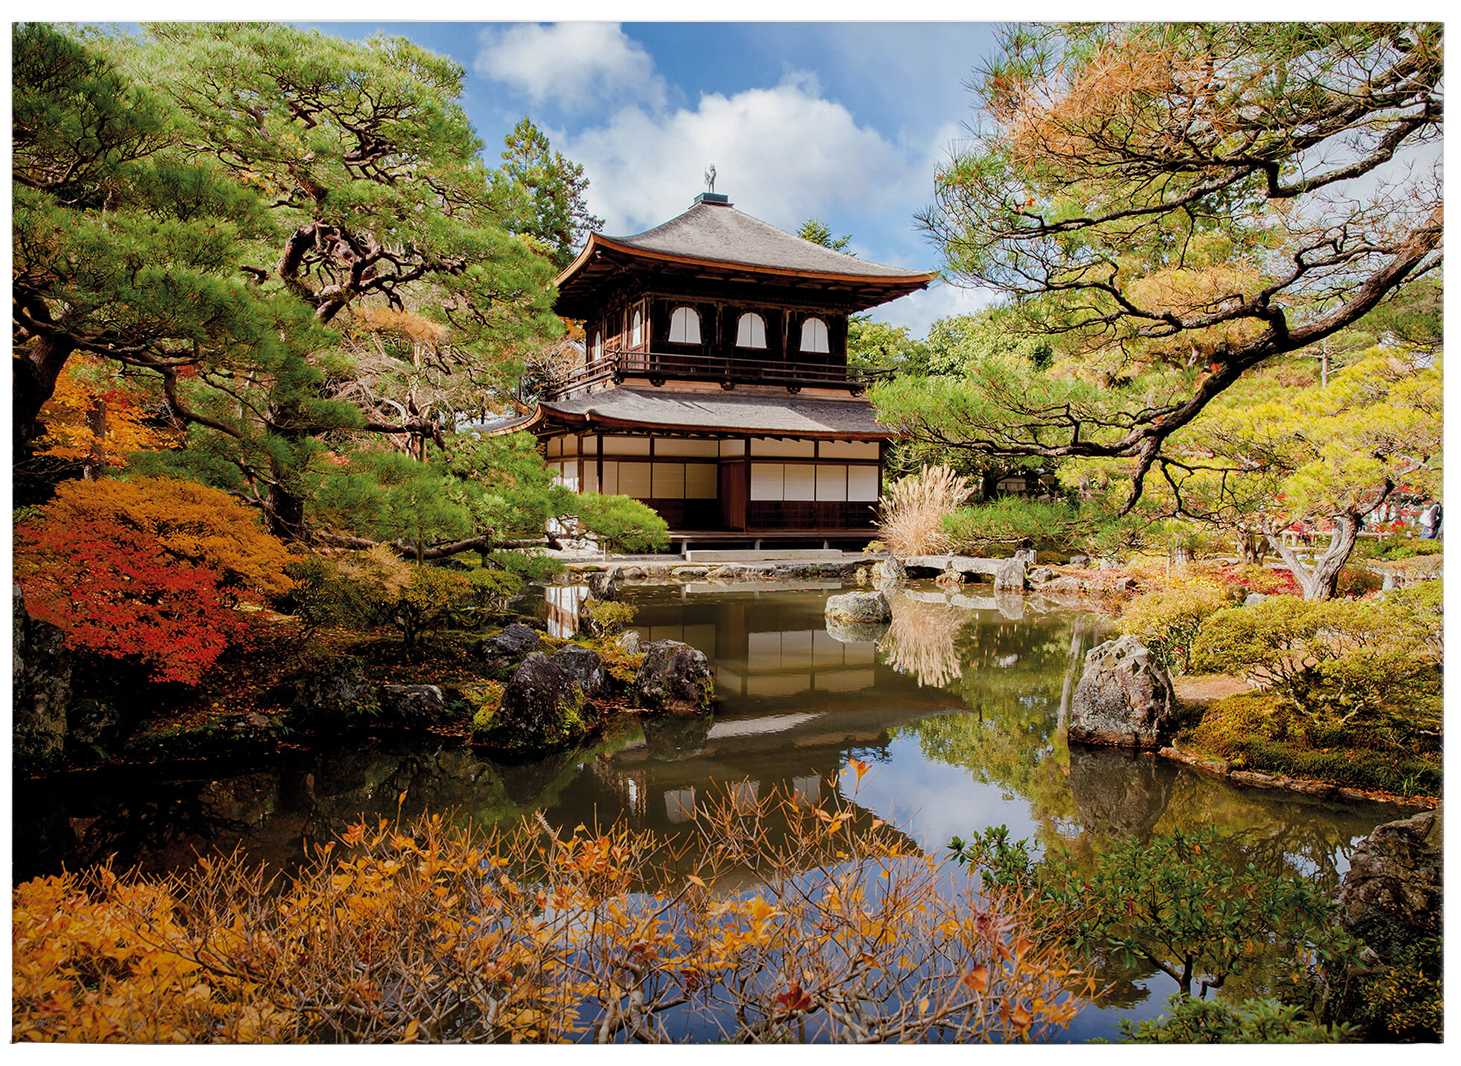             Canvas print Japanese garden with pagoda
        